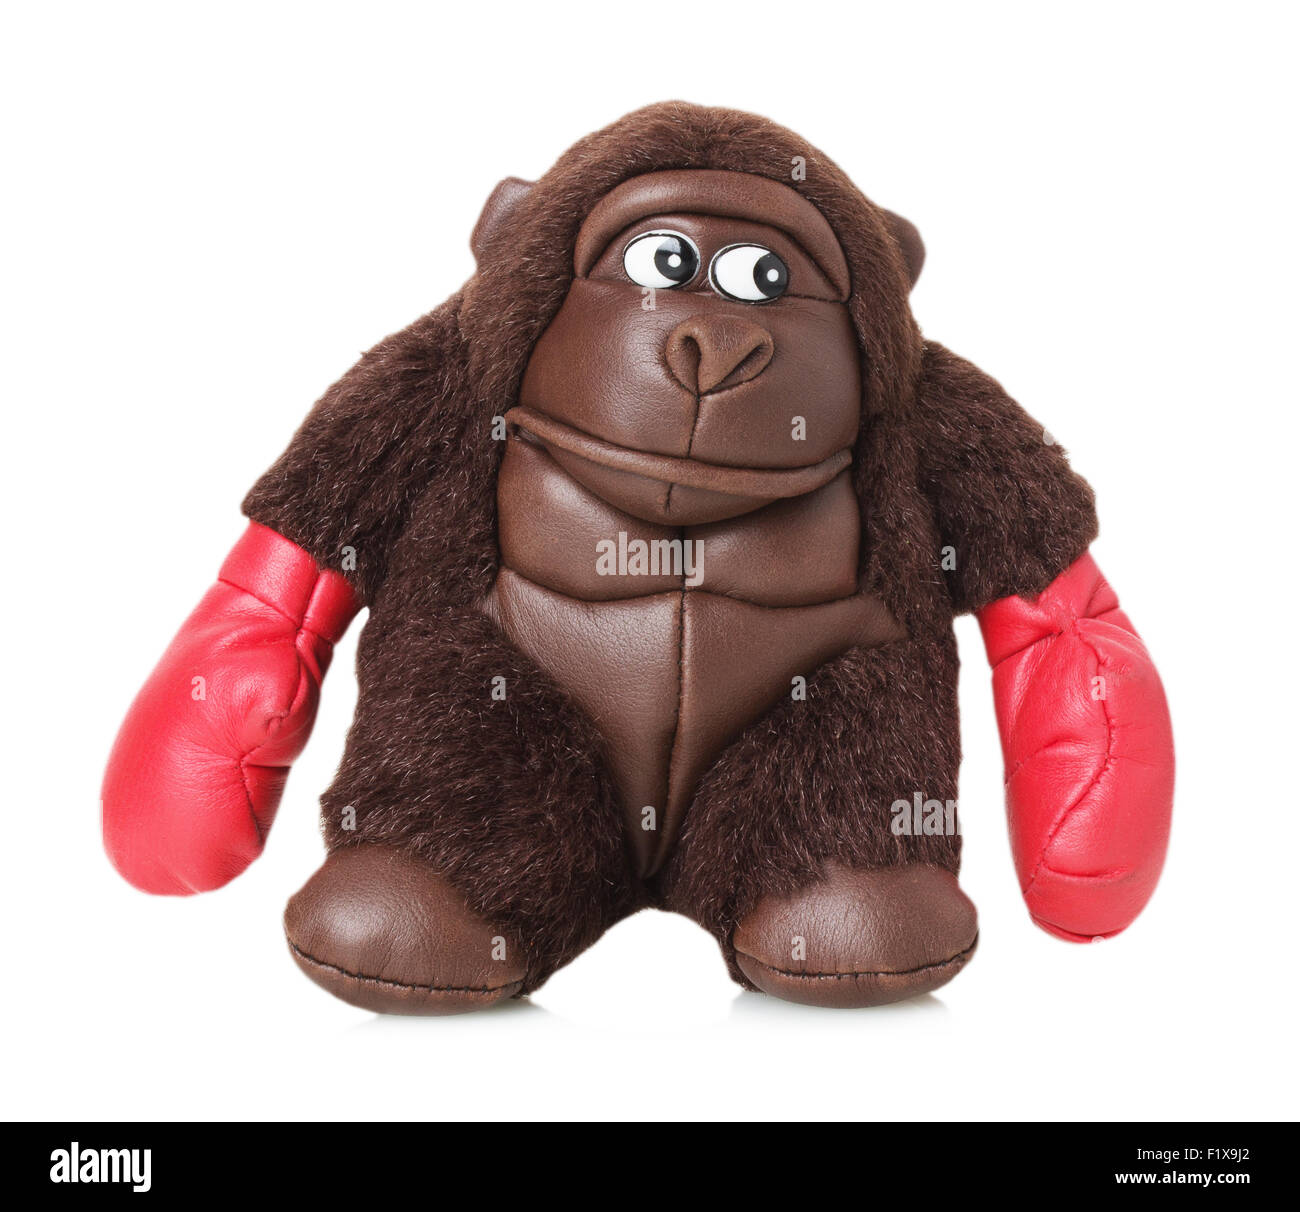 Gorila de juguete Imágenes recortadas de stock - Alamy